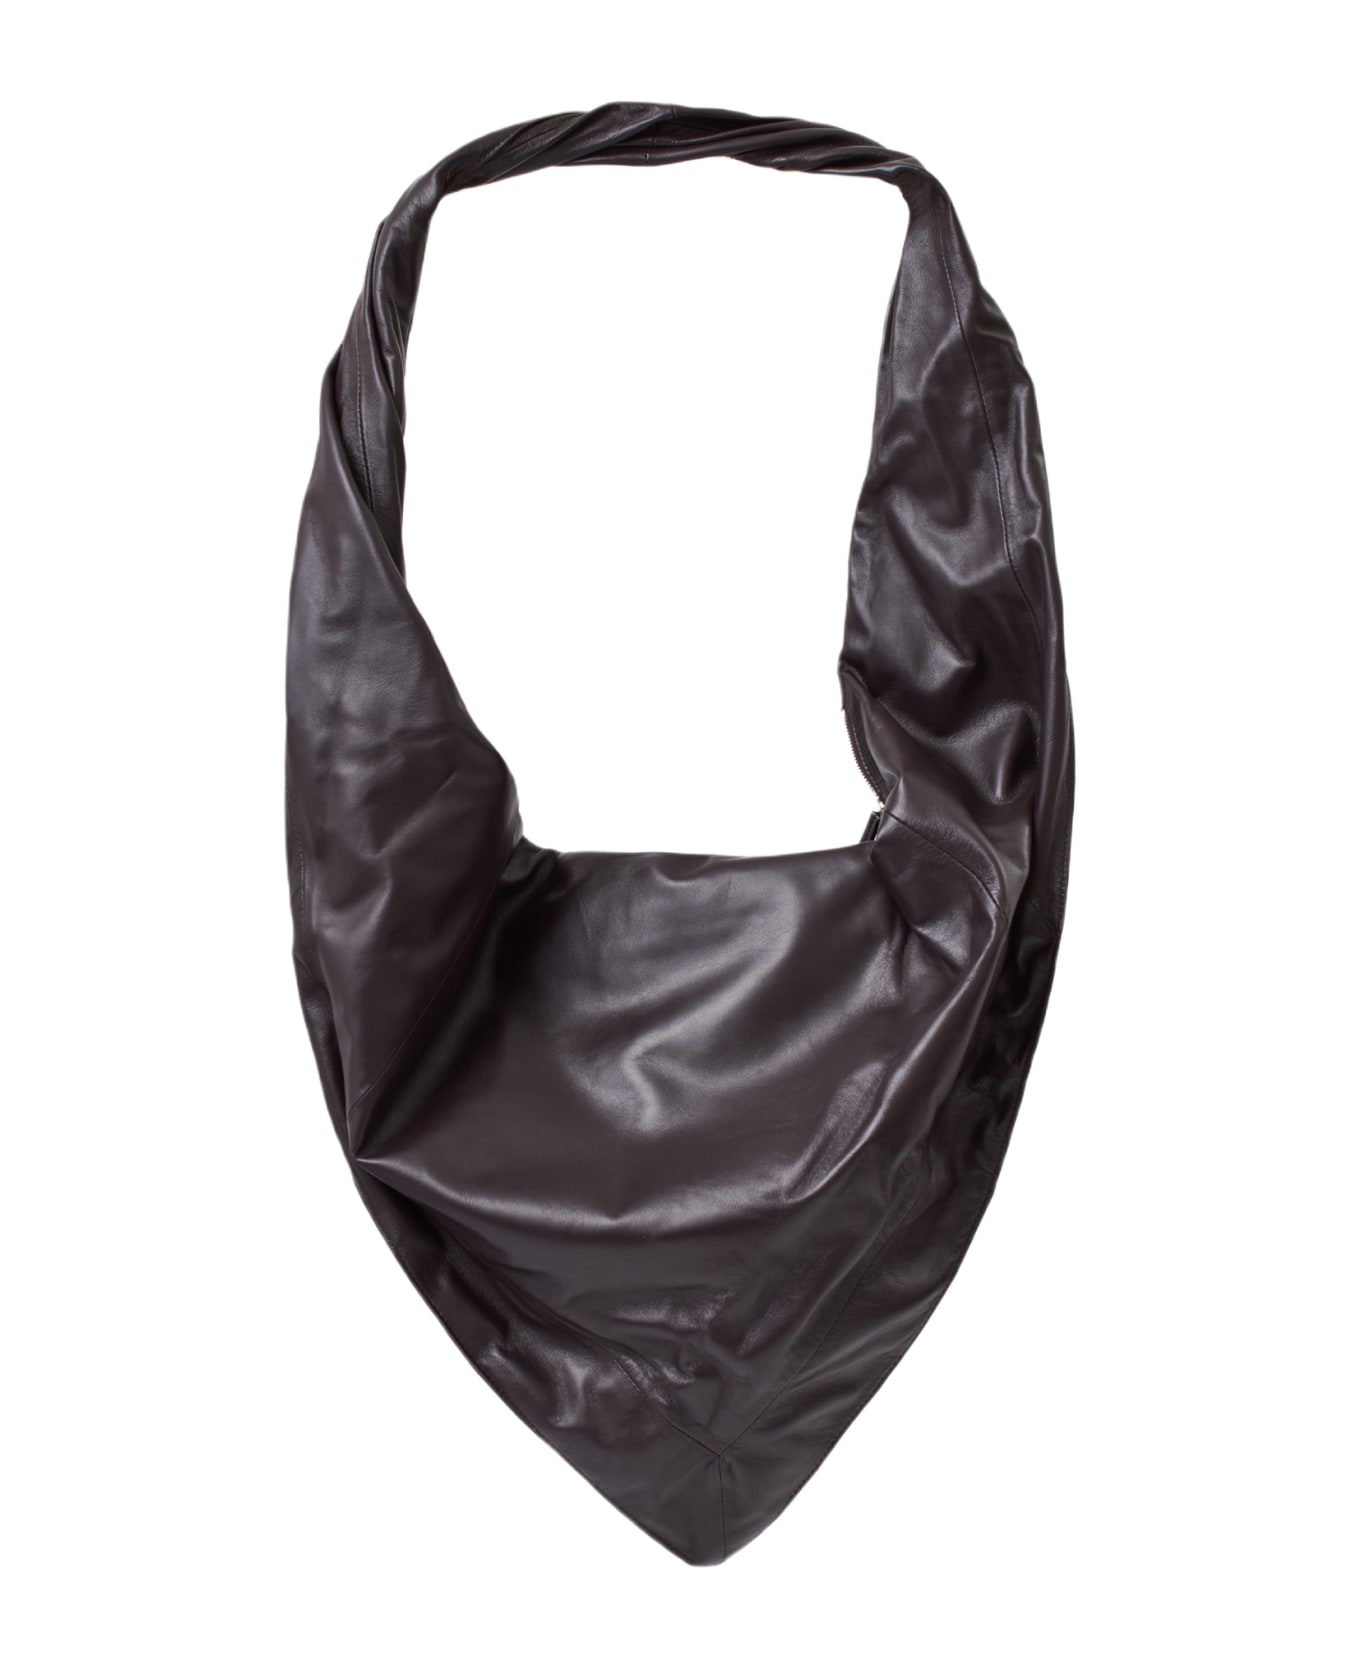 Lemaire Scarf Bag Bag - brown トートバッグ